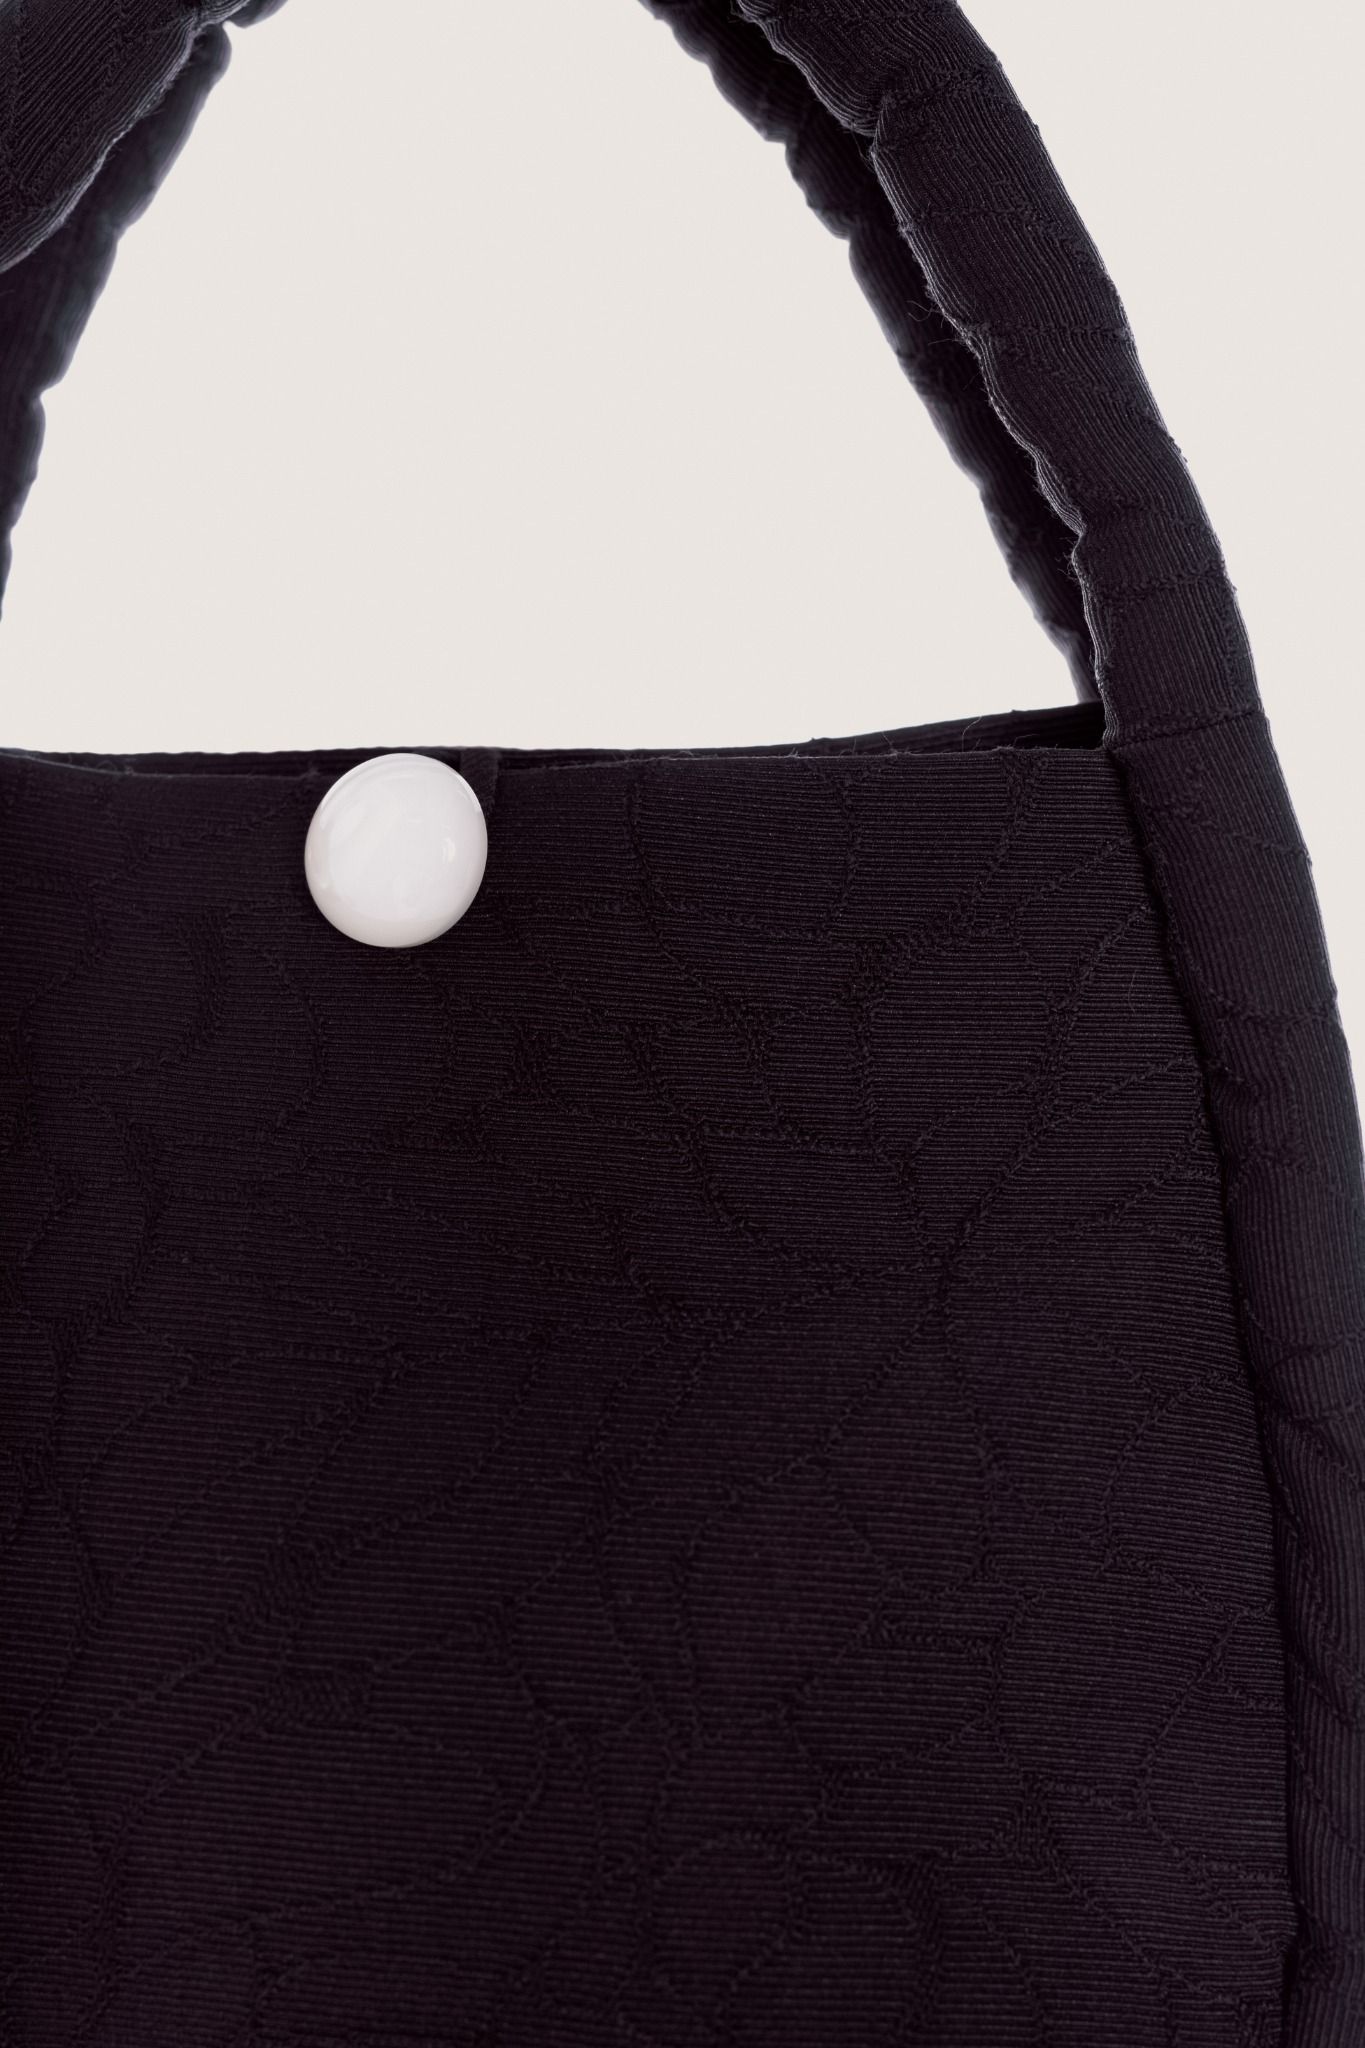  Black Floral Textured Mini Bag 